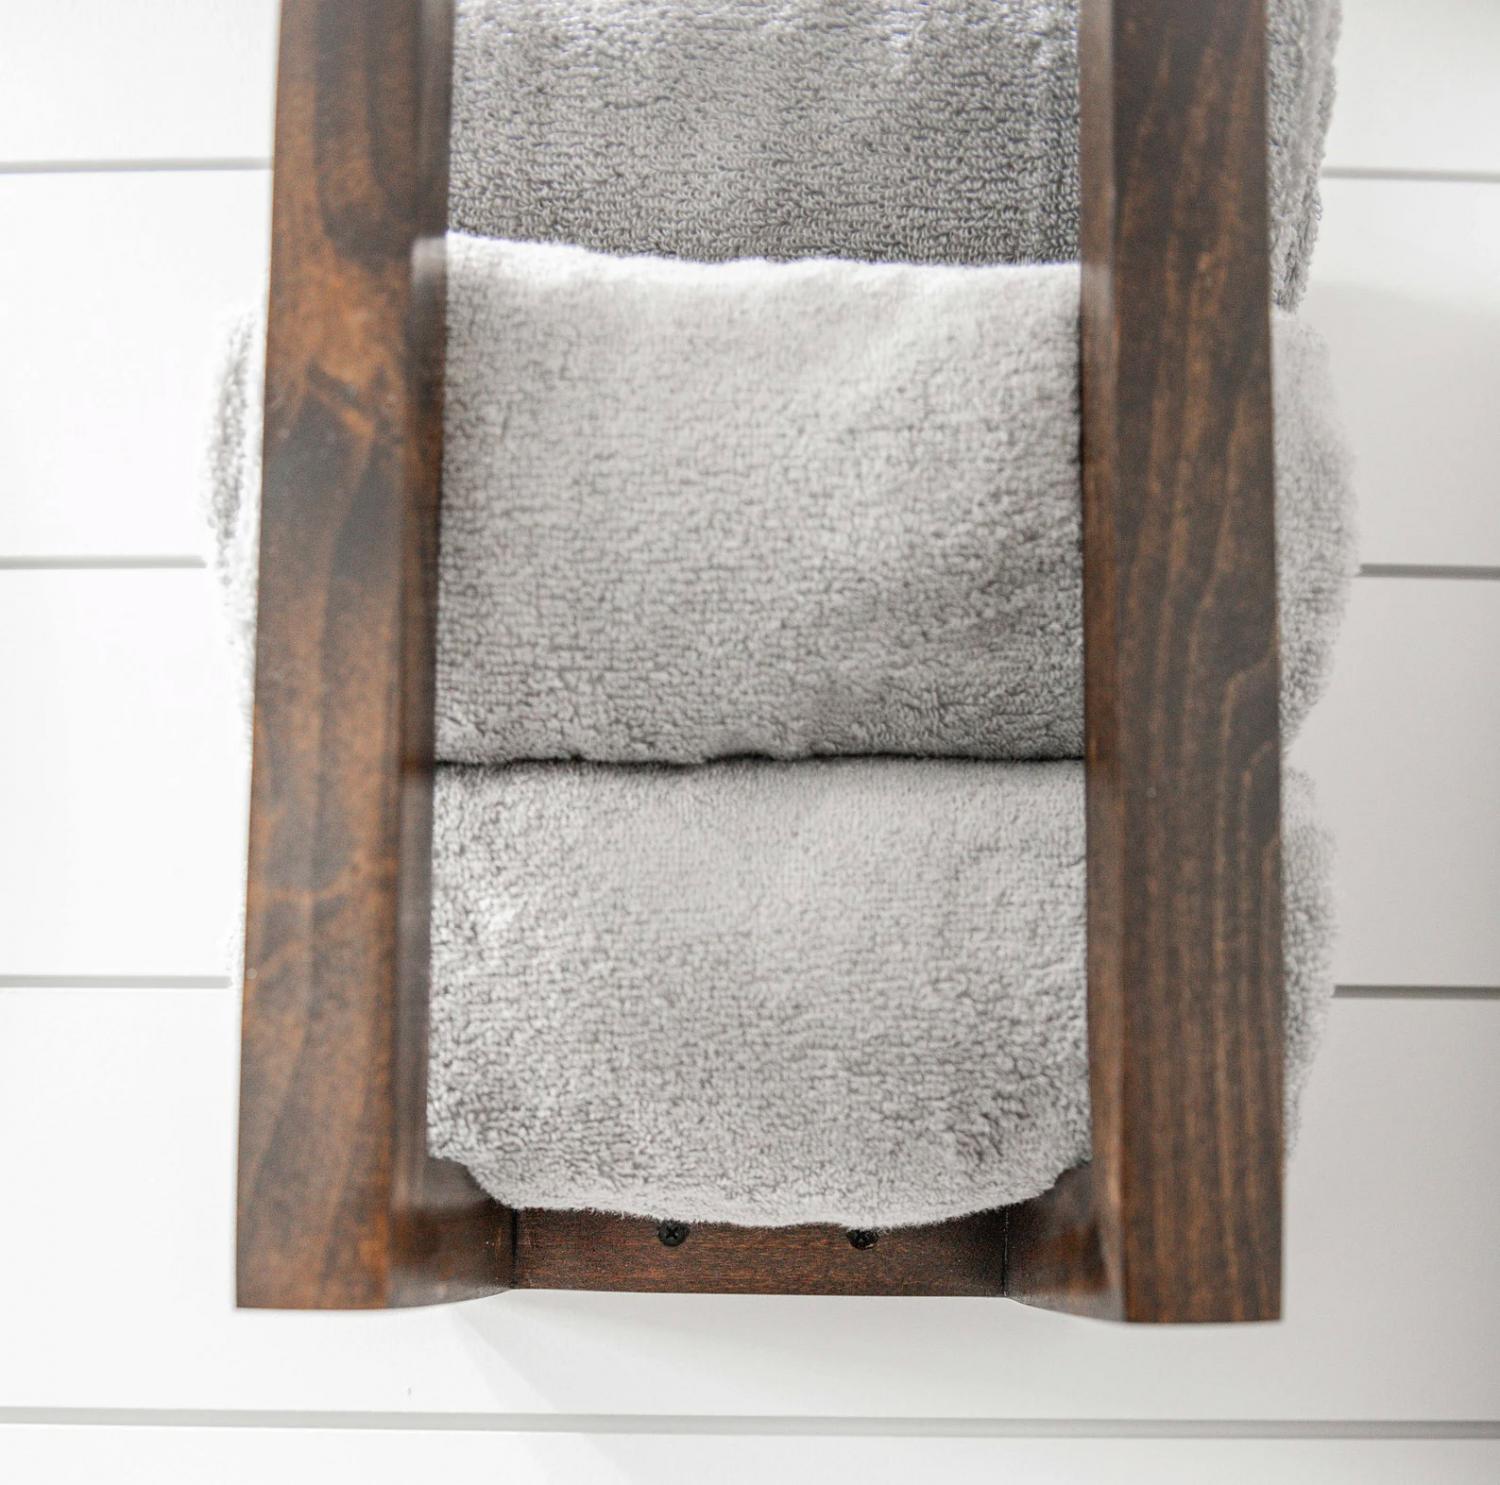 Wooden Farmhouse Style Towel Rack on white wall